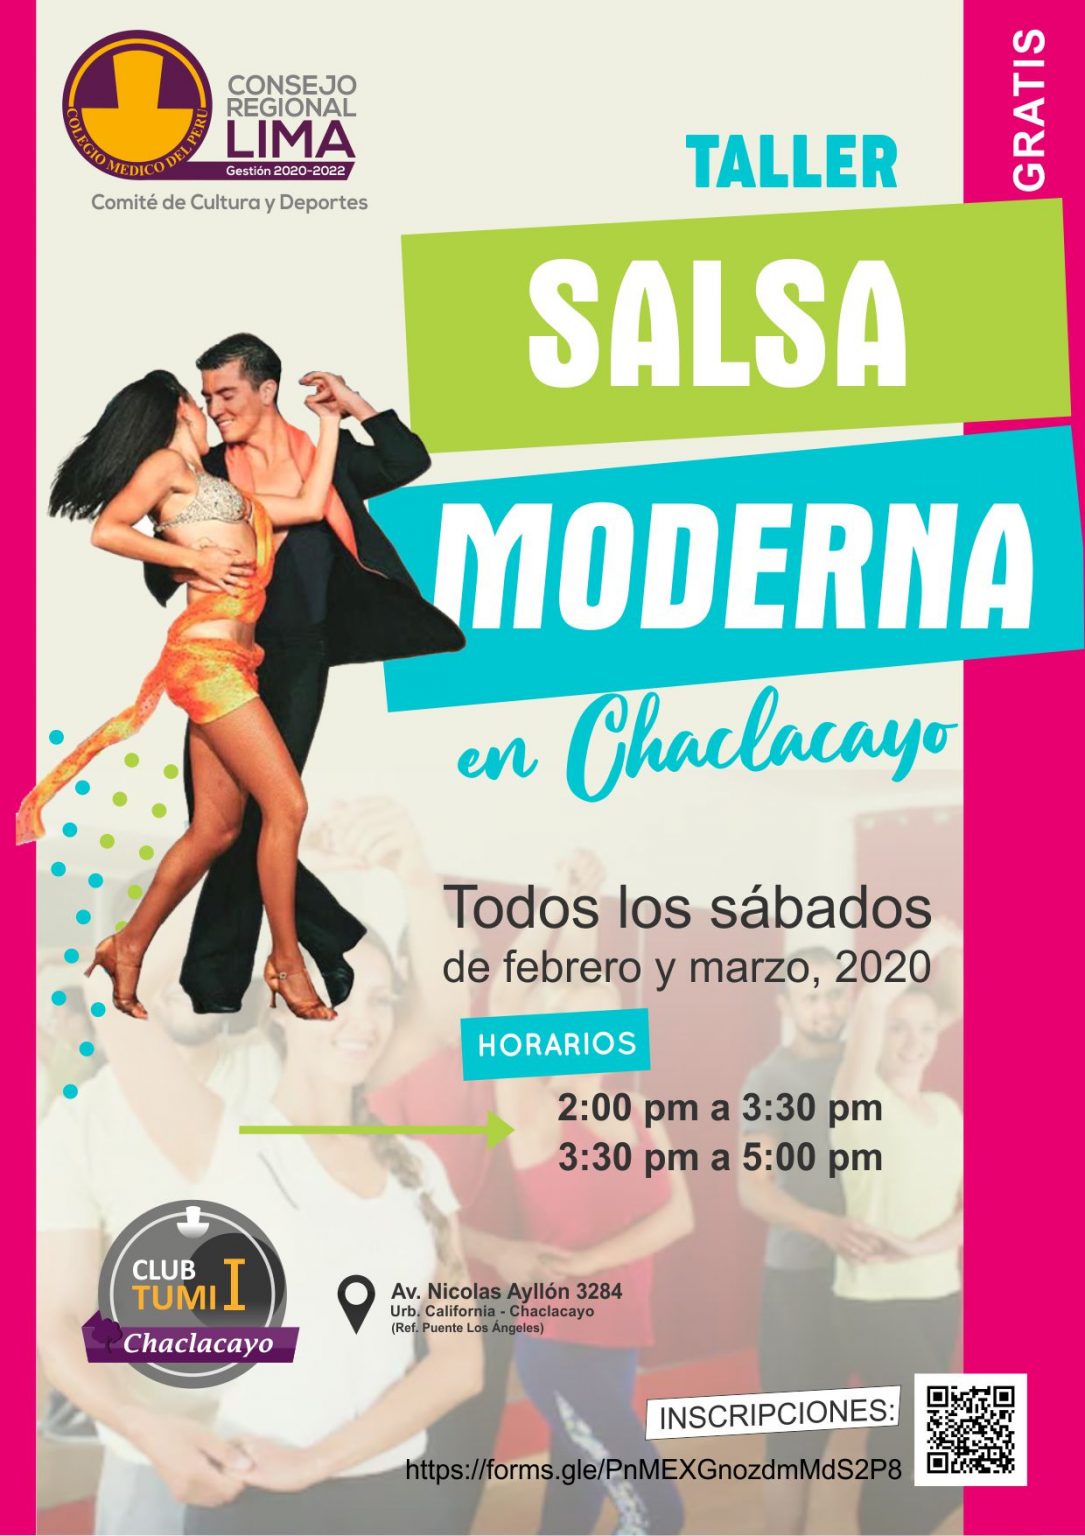 Taller de Salsa Moderna en Chaclacayo Consejo Regional III Lima CMP